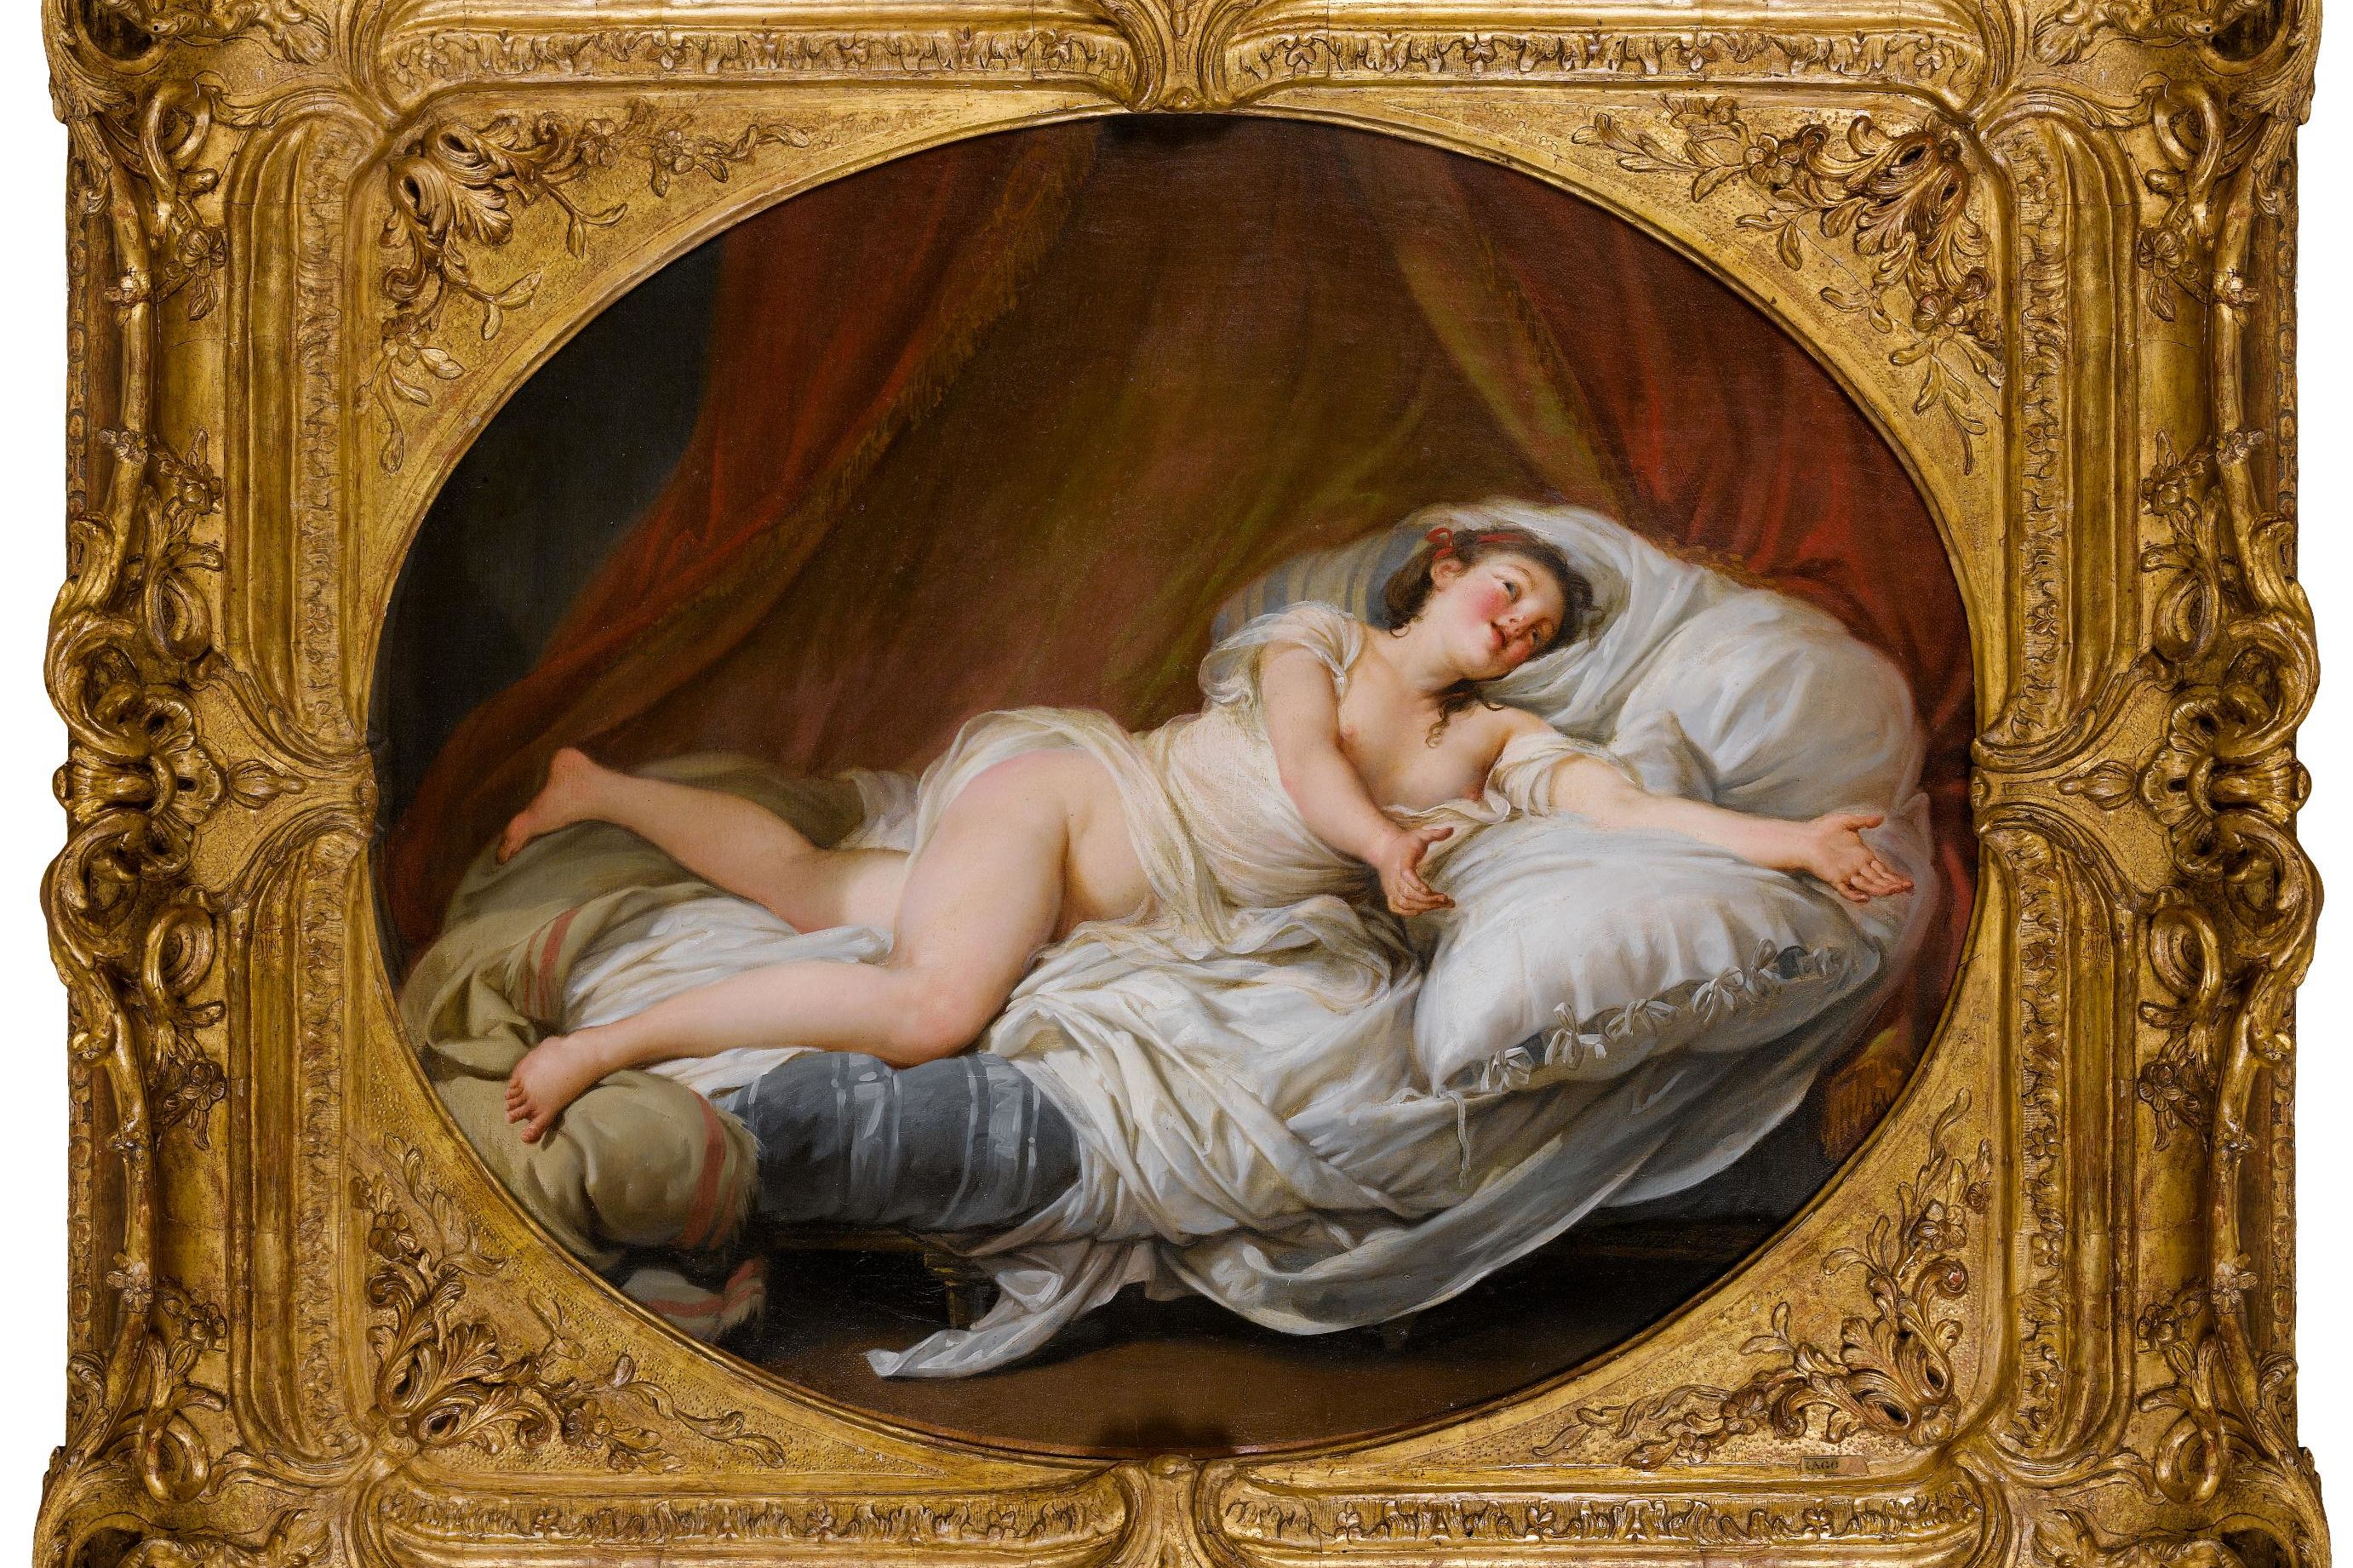 Mythology Erotica - The gender politics behind erotic art | CNN